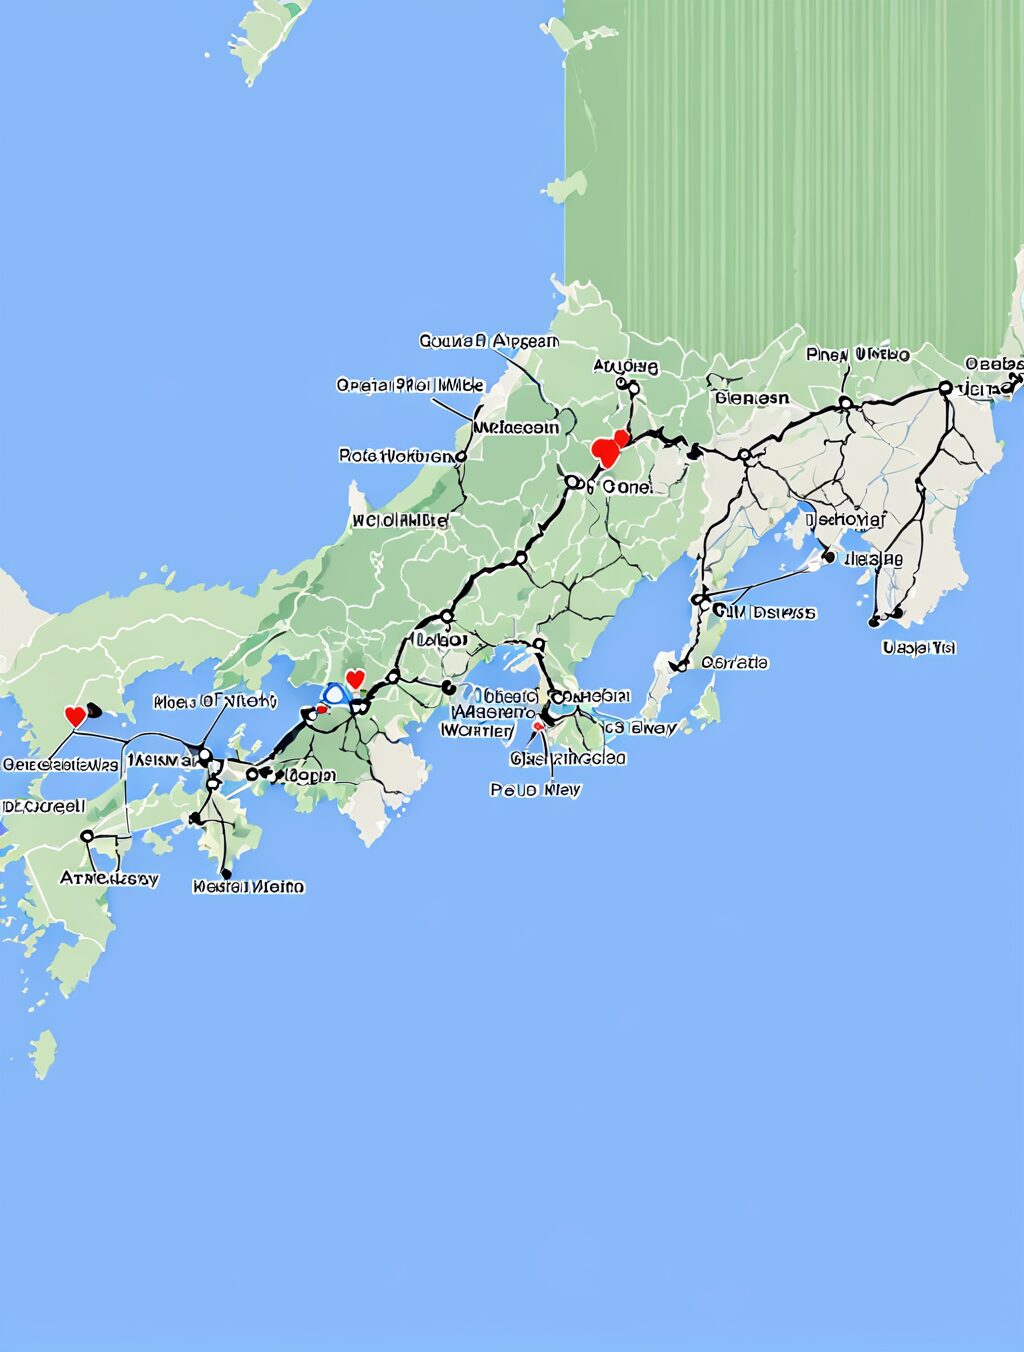 10 day japan itinerary april